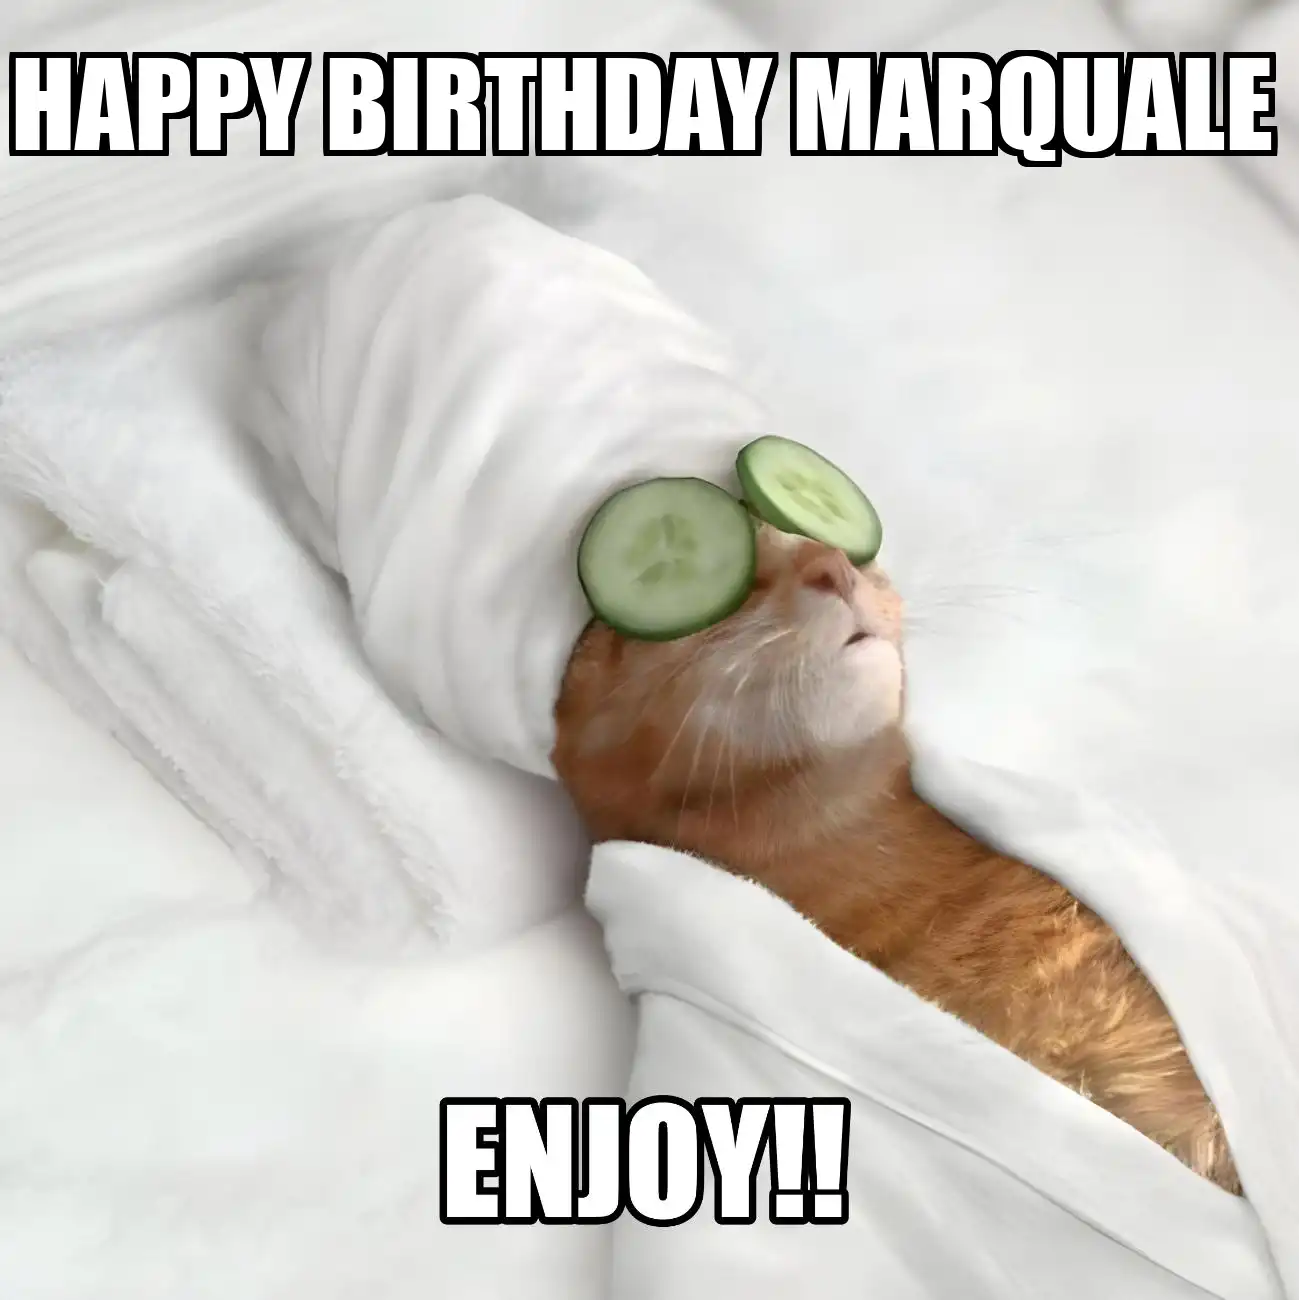 Happy Birthday Marquale Enjoy Cat Meme